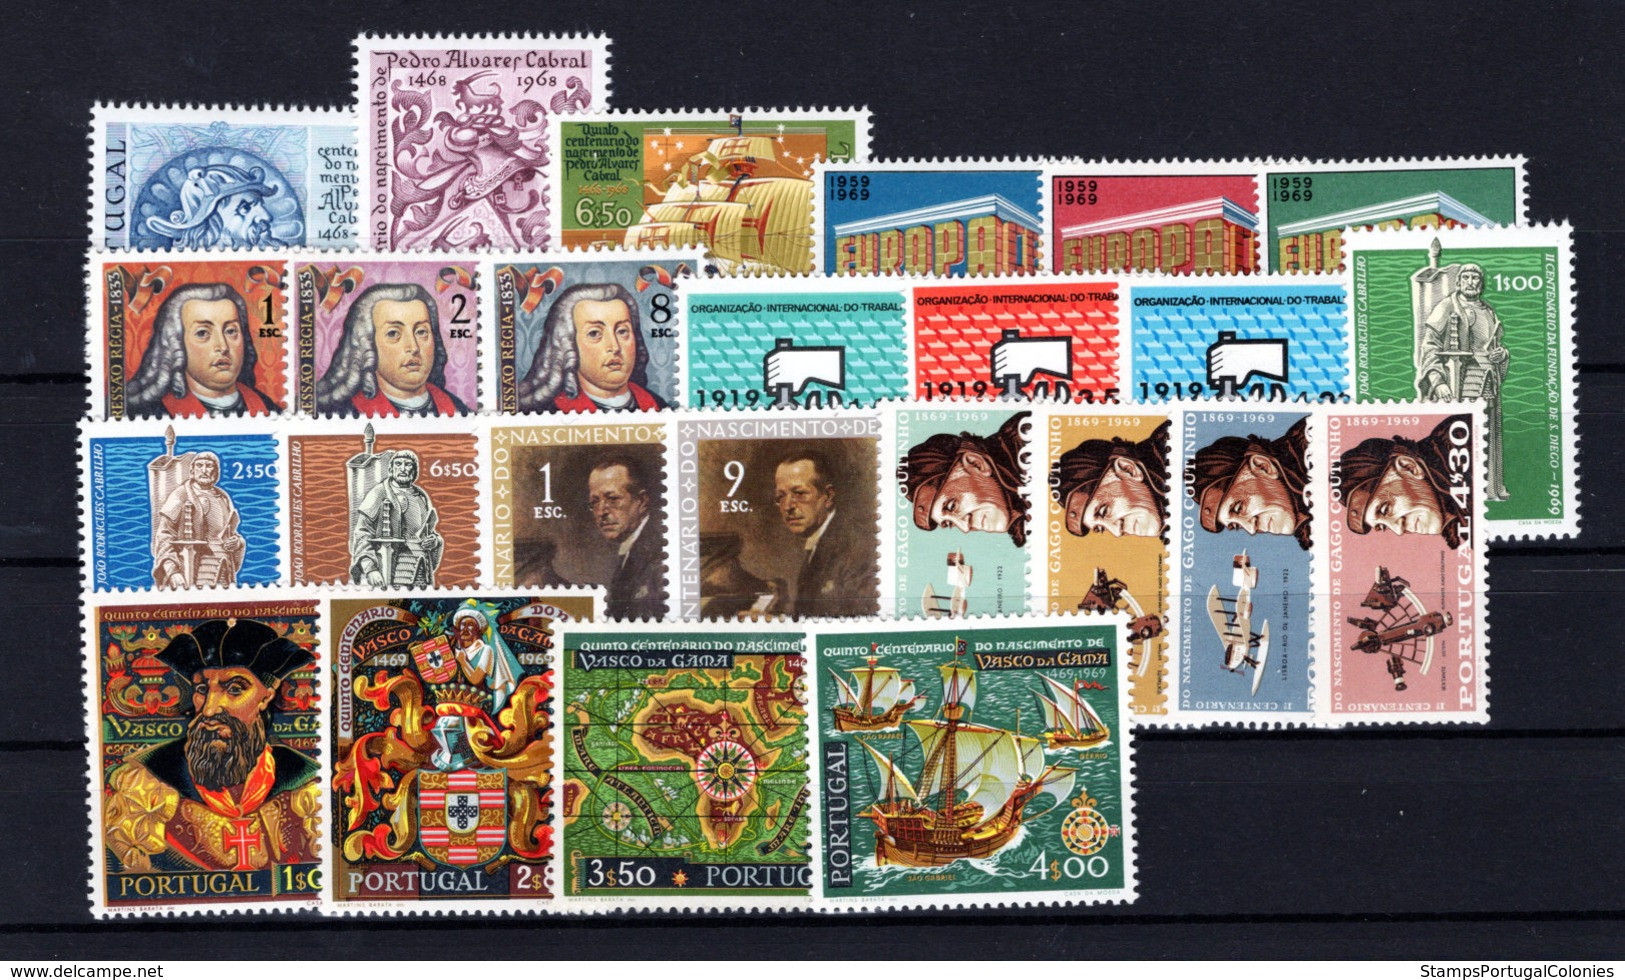 1969 Portugal Complete Year MNH Stamps. Année Compléte Timbres Neuf Sans Charnière. Ano Completo Novo Sem Charneira. - Années Complètes